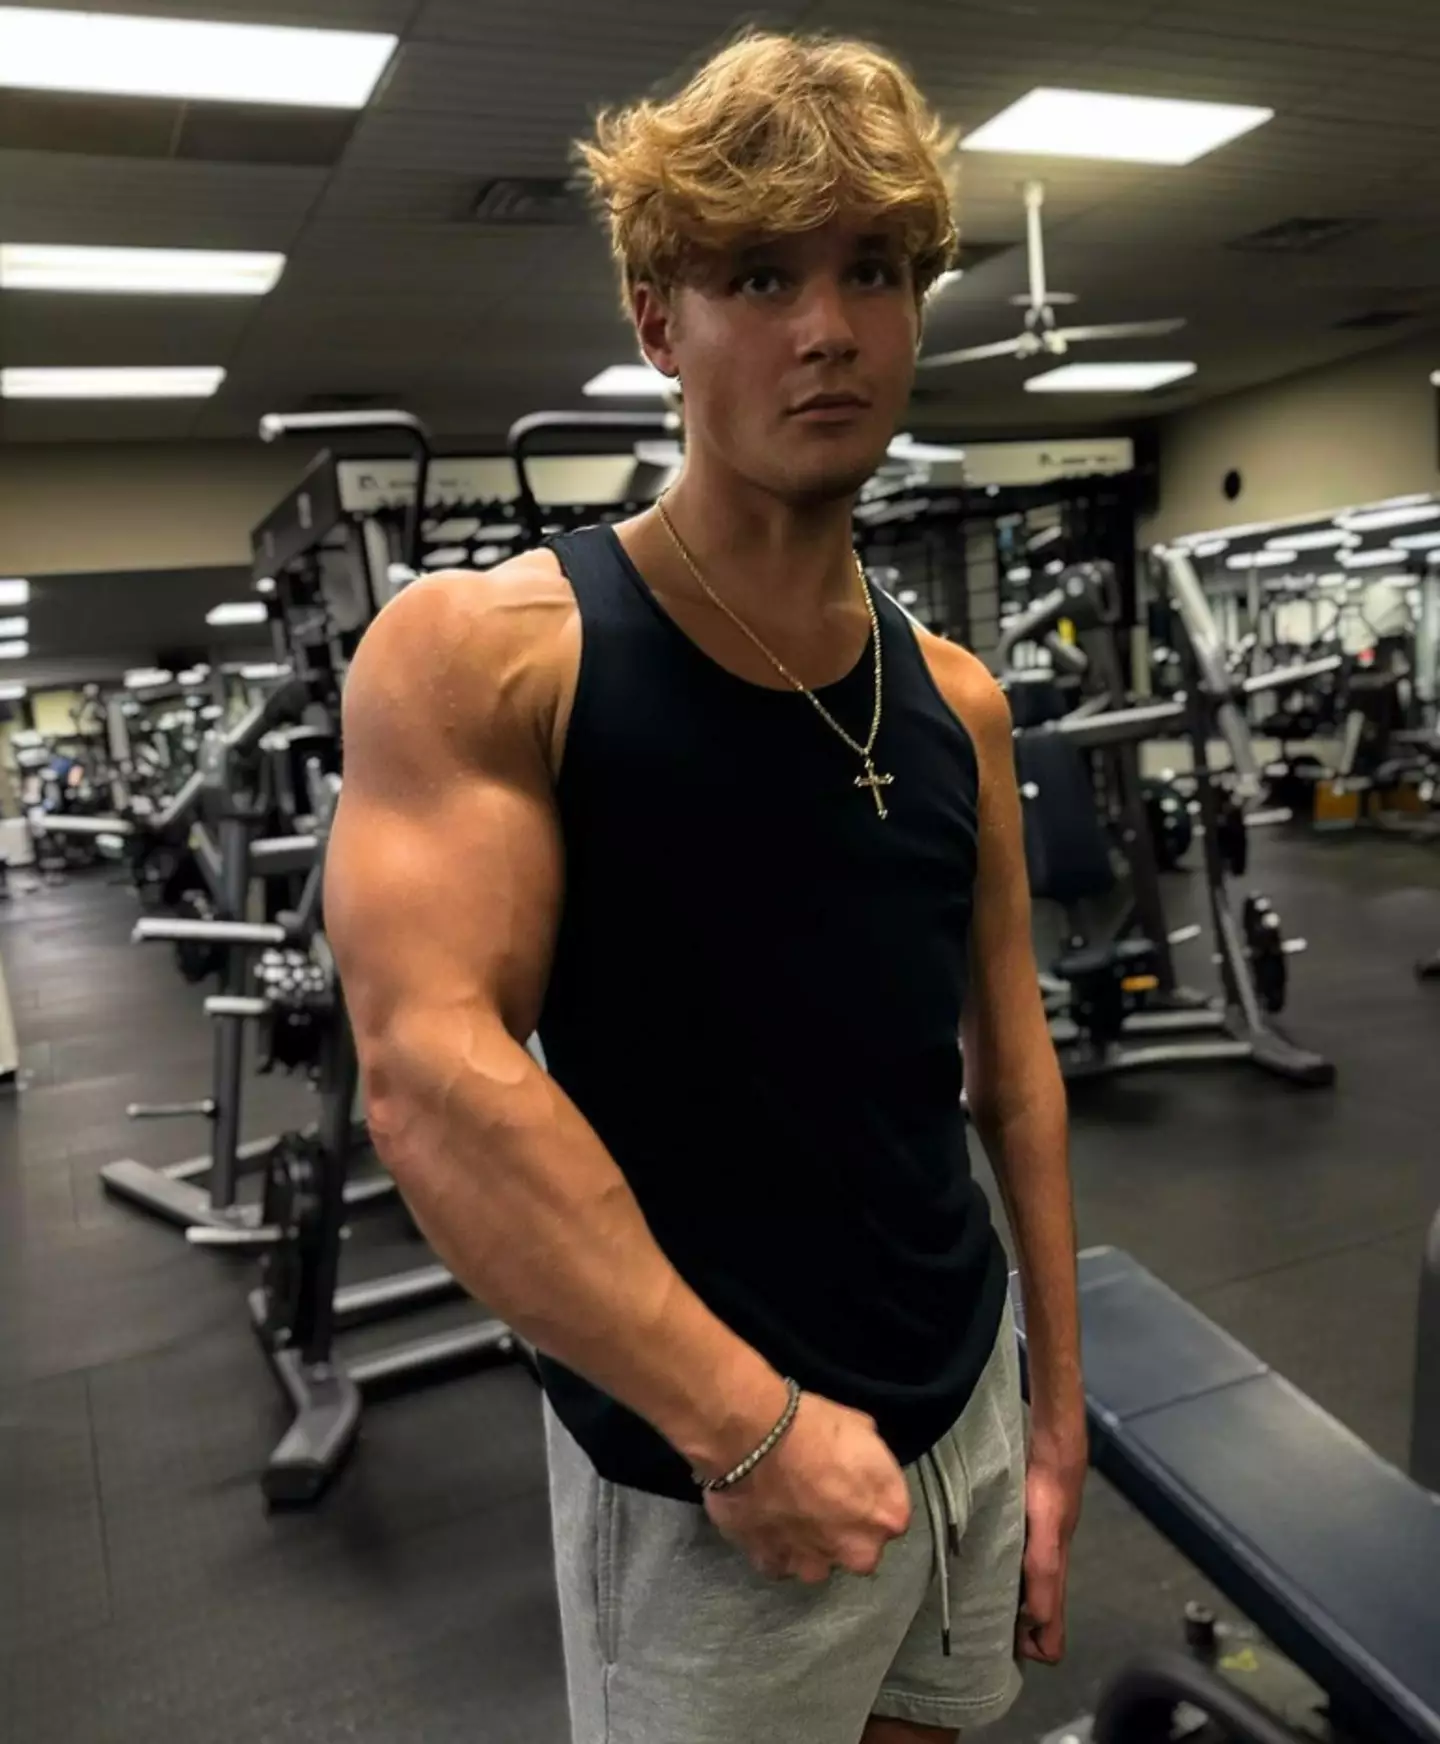 Jackson Schop regularly shares fitness updates on social media.